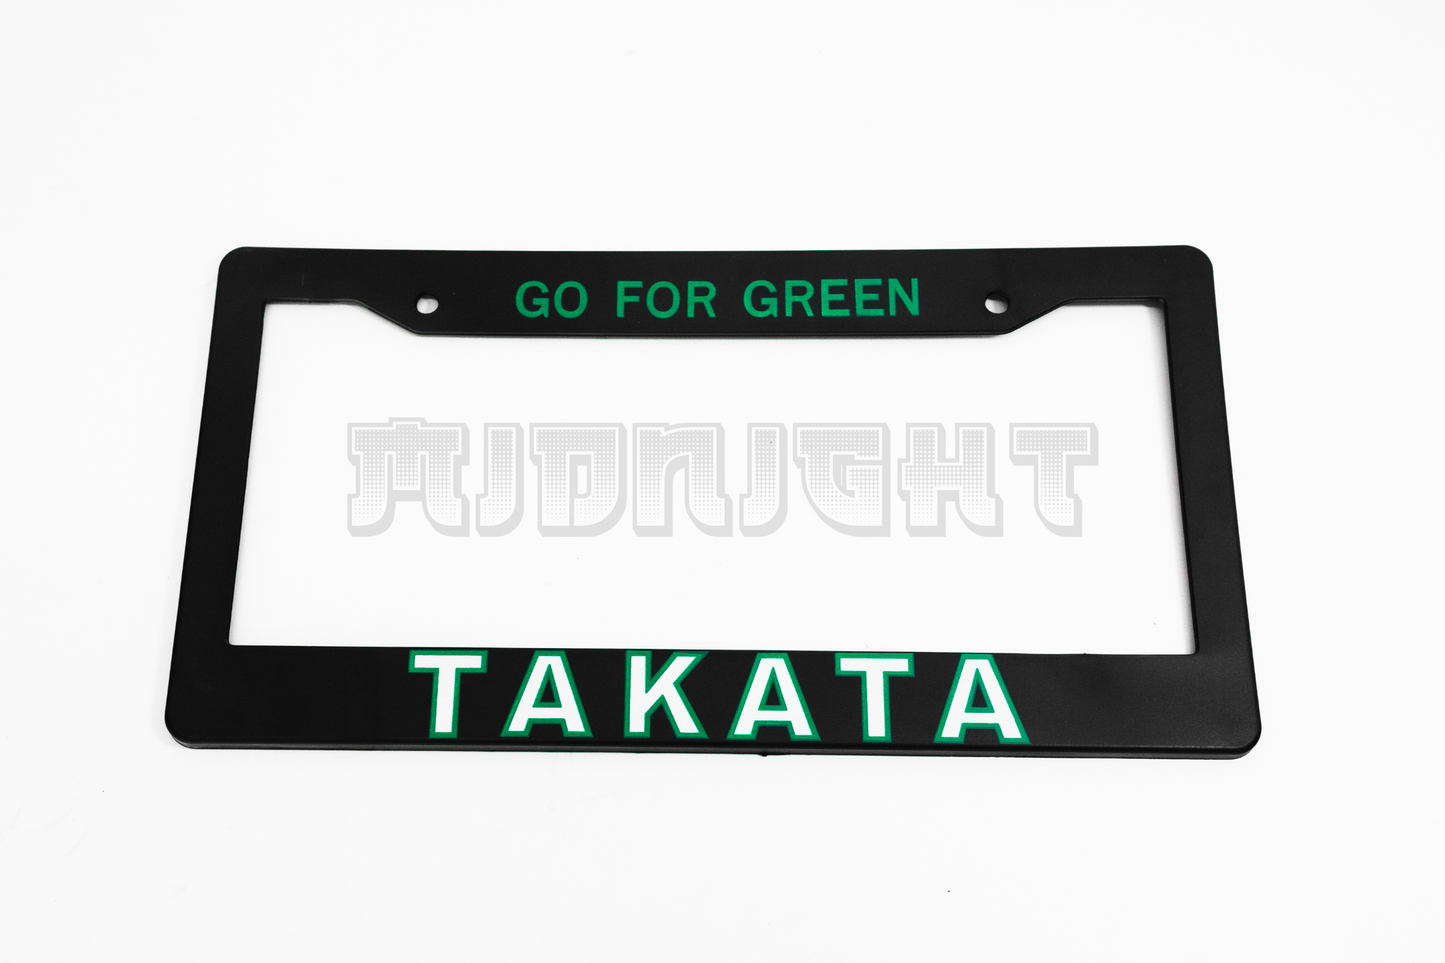 TAKATA License Plate Frame